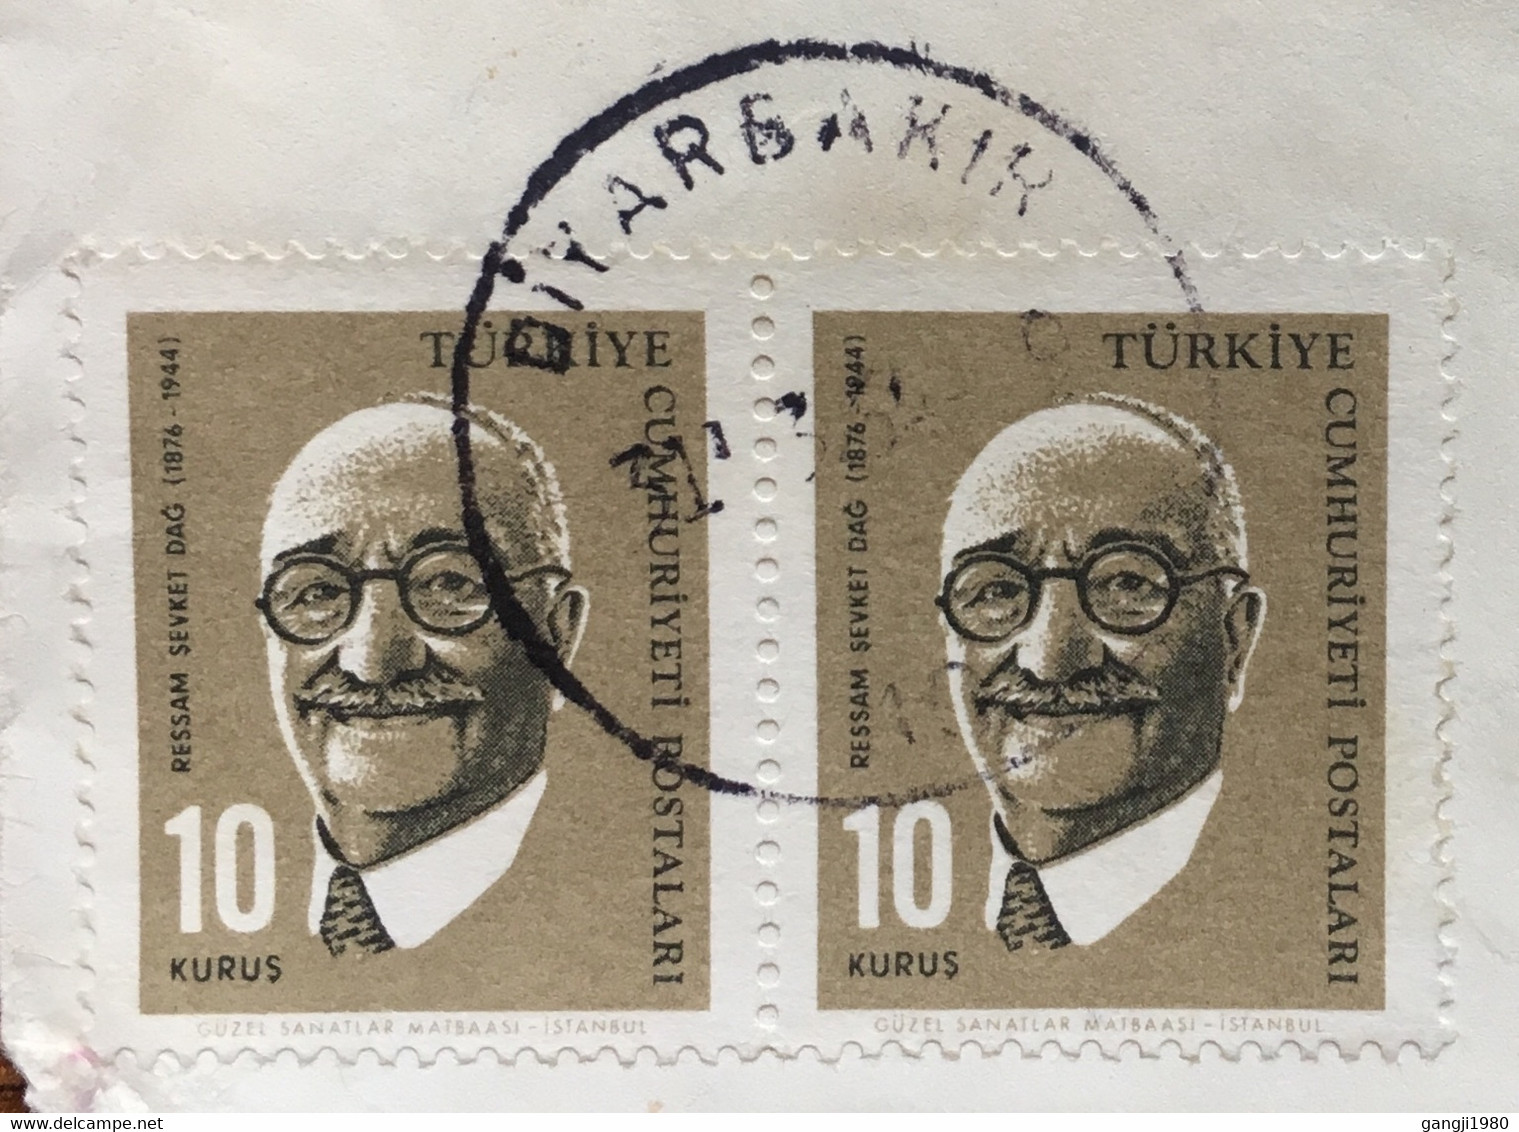 TURKEY 1964, VIGNETTE AIRMAIL LABEL ,POPLIN ARFIL RARE ! 4 STAMPS RESSAM ,CANKAYA ,COVER DIYARBAKIR CITY CANCELLATION TO - Cartas & Documentos